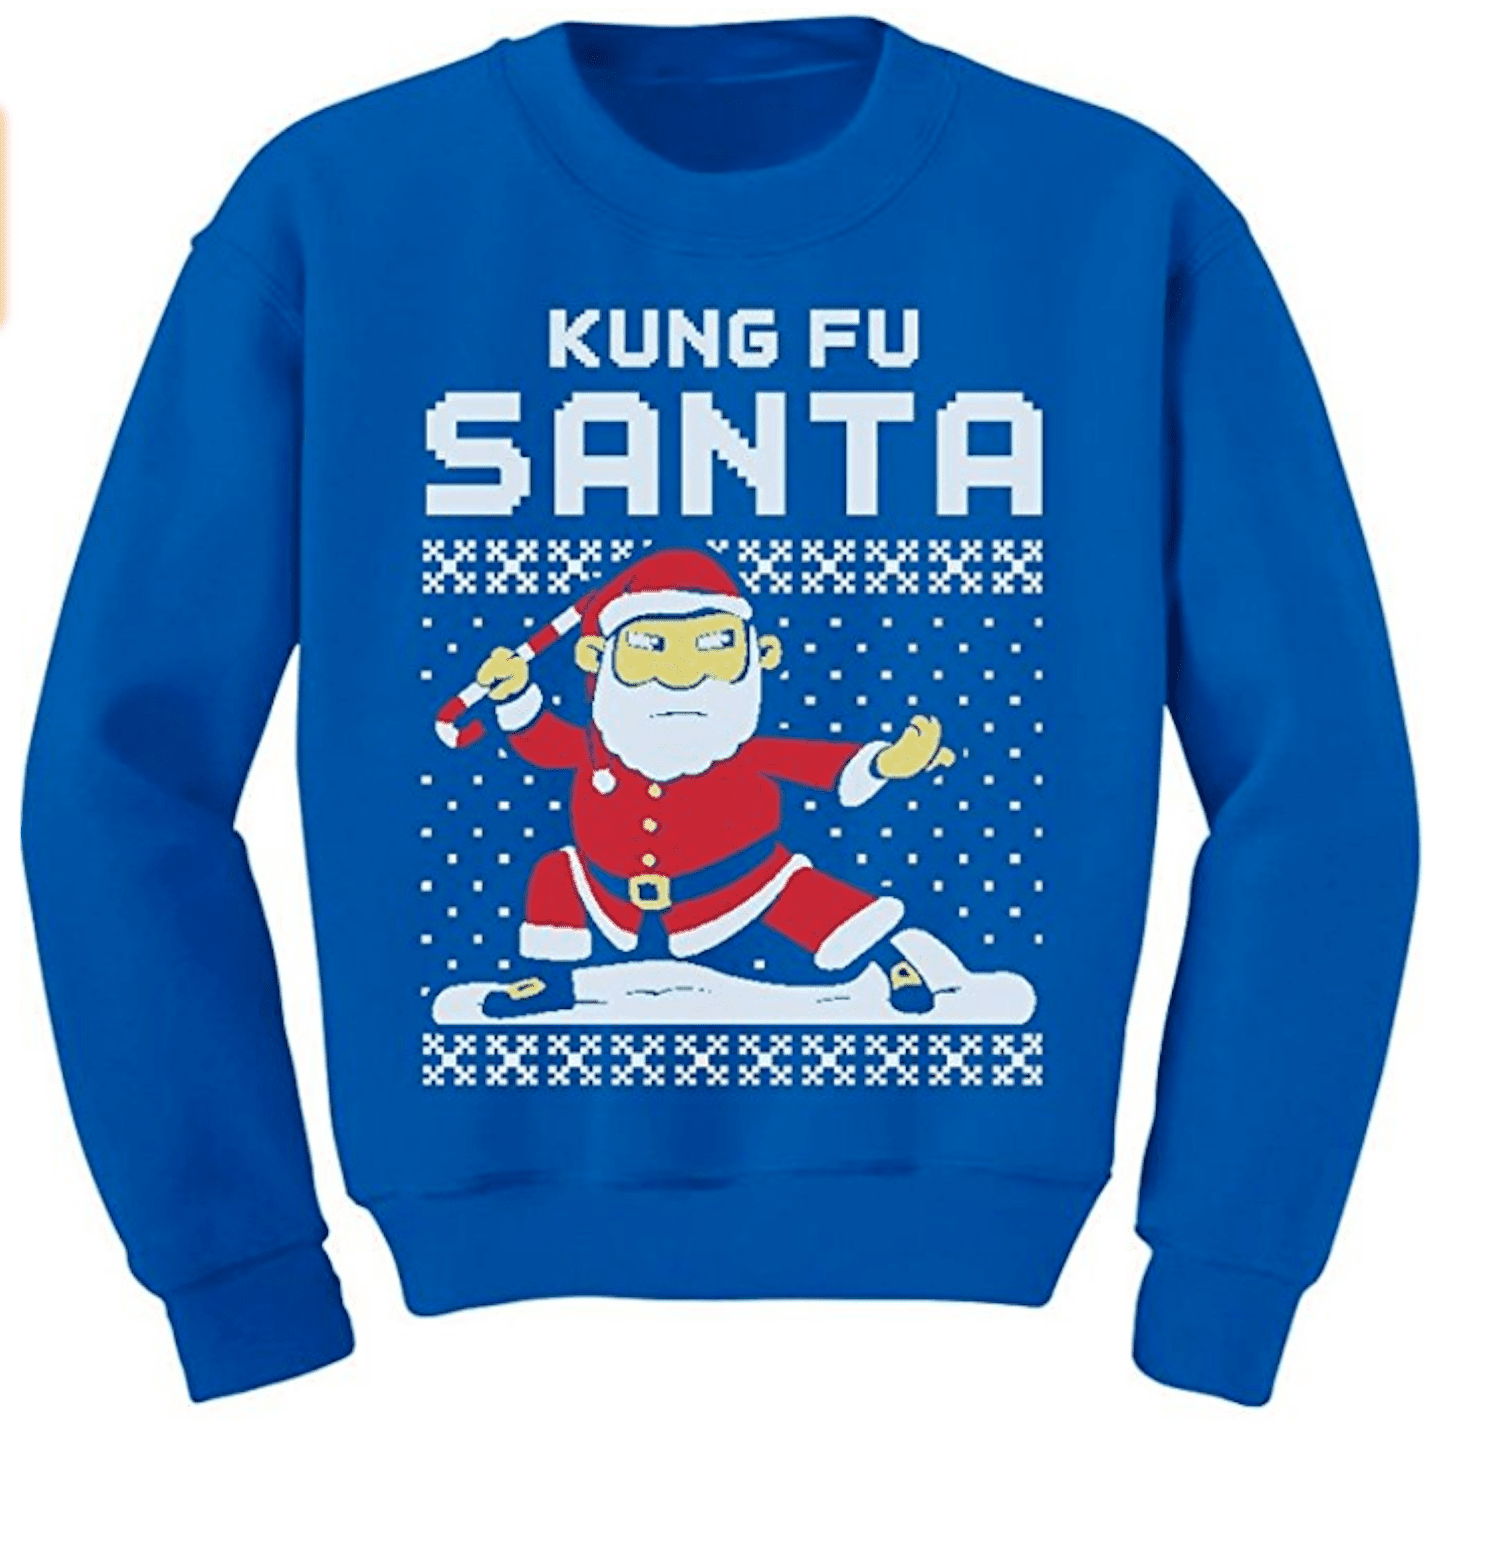 Kung Fu Santa Ugly Christmas Sweater 583dfc615f9b58d5b